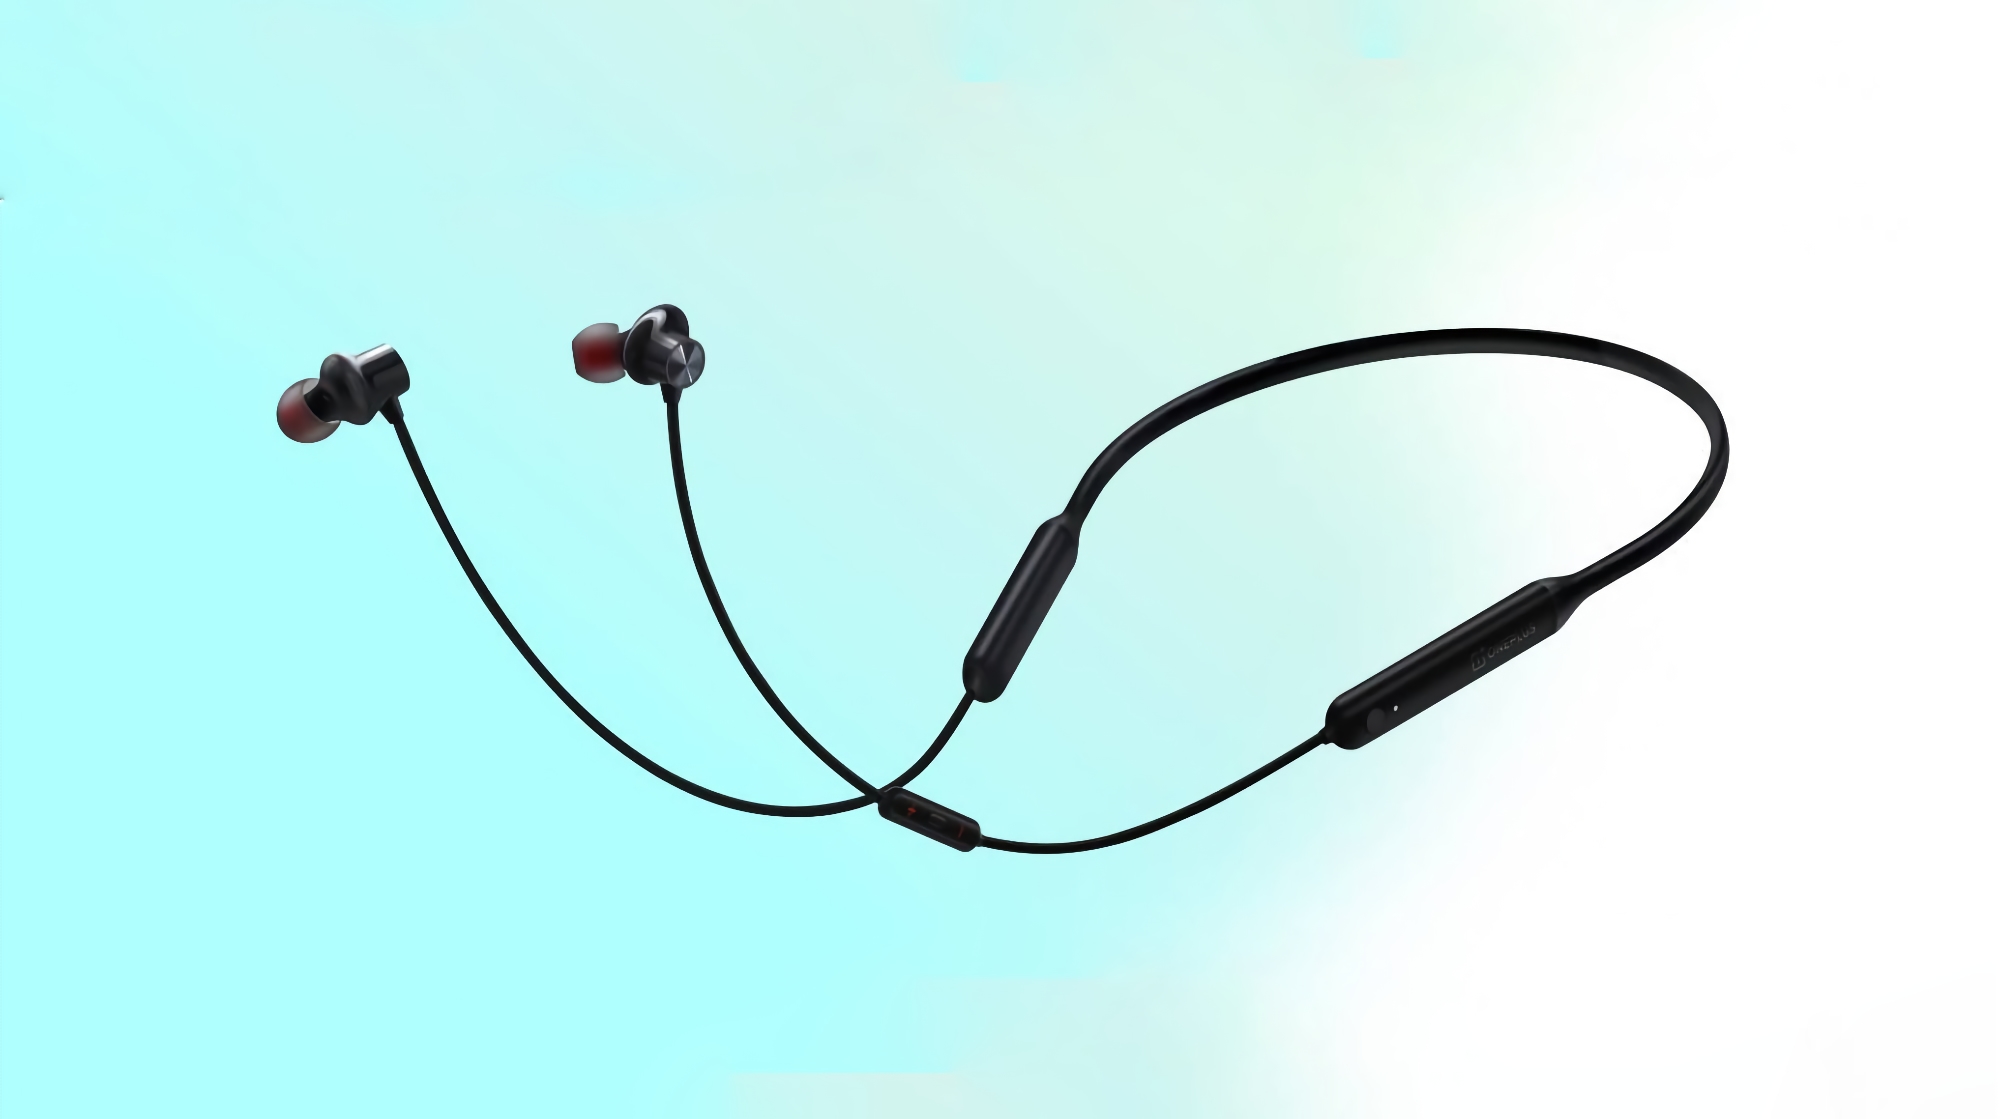 OnePlus is working on new OnePlus Bullets Wireless Z headphones